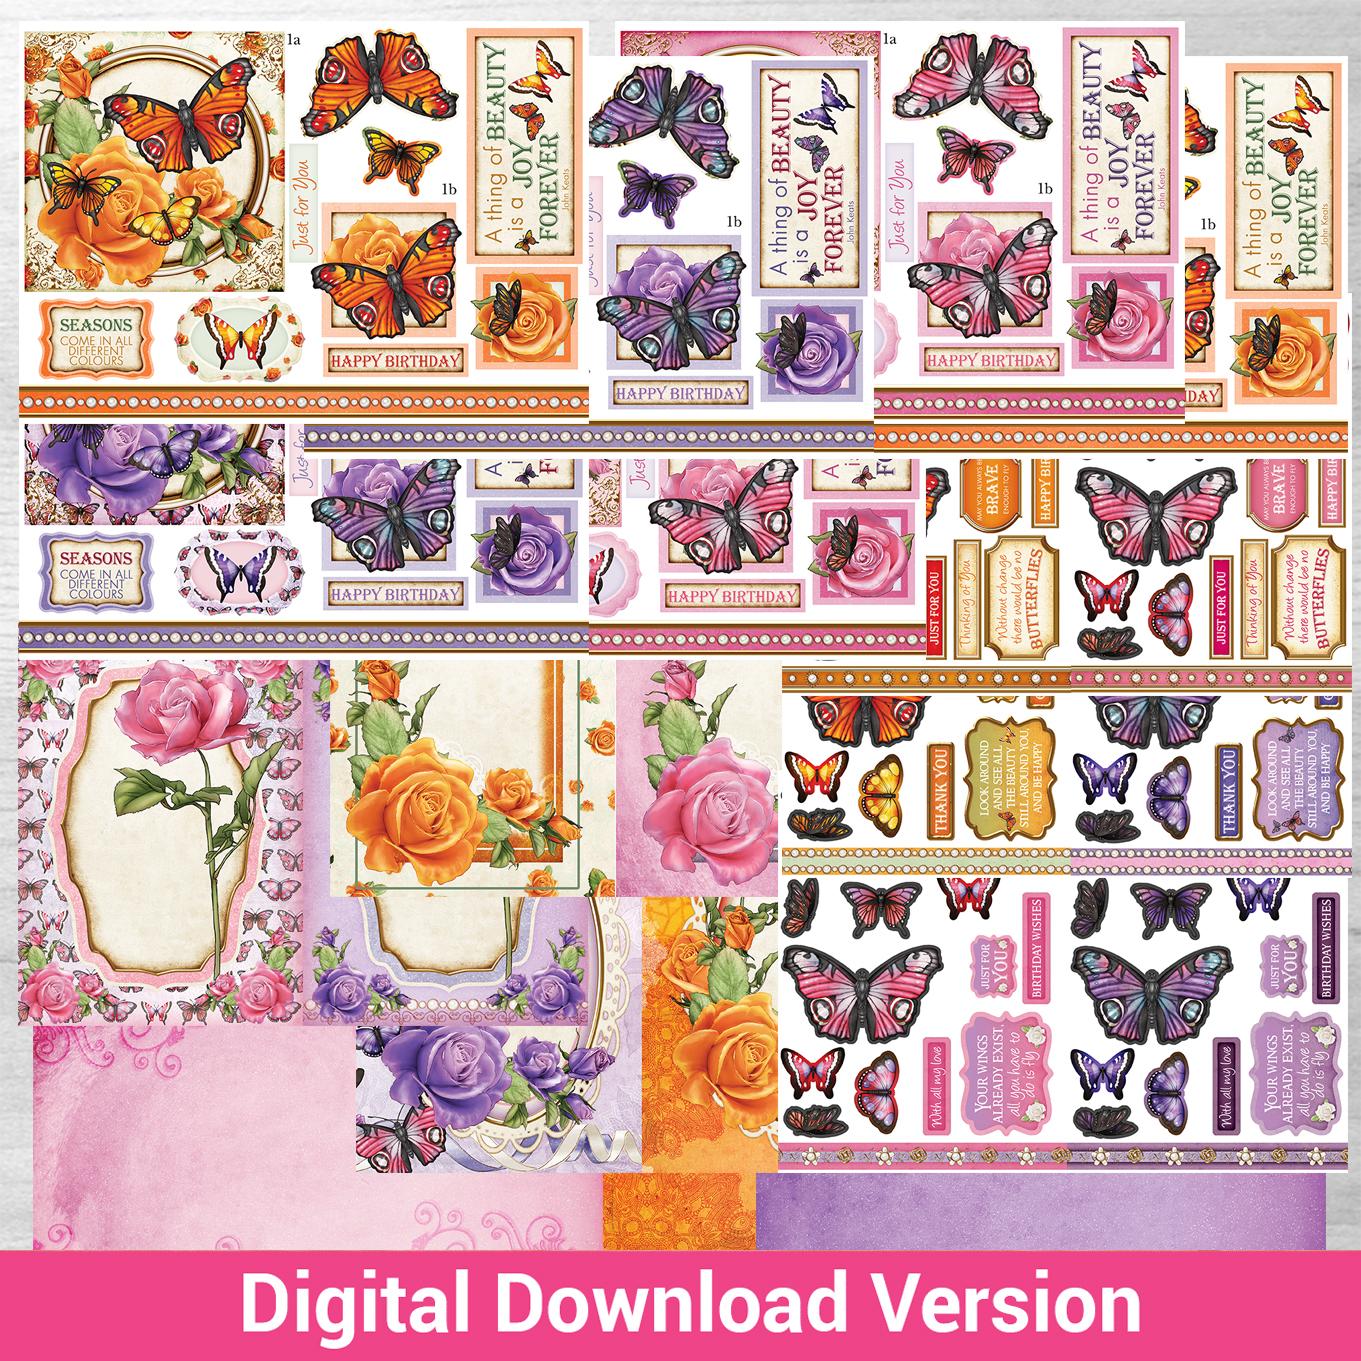 Butterfly Surprise - Enchanted Butterfly Cardmaking Kit Digital Download